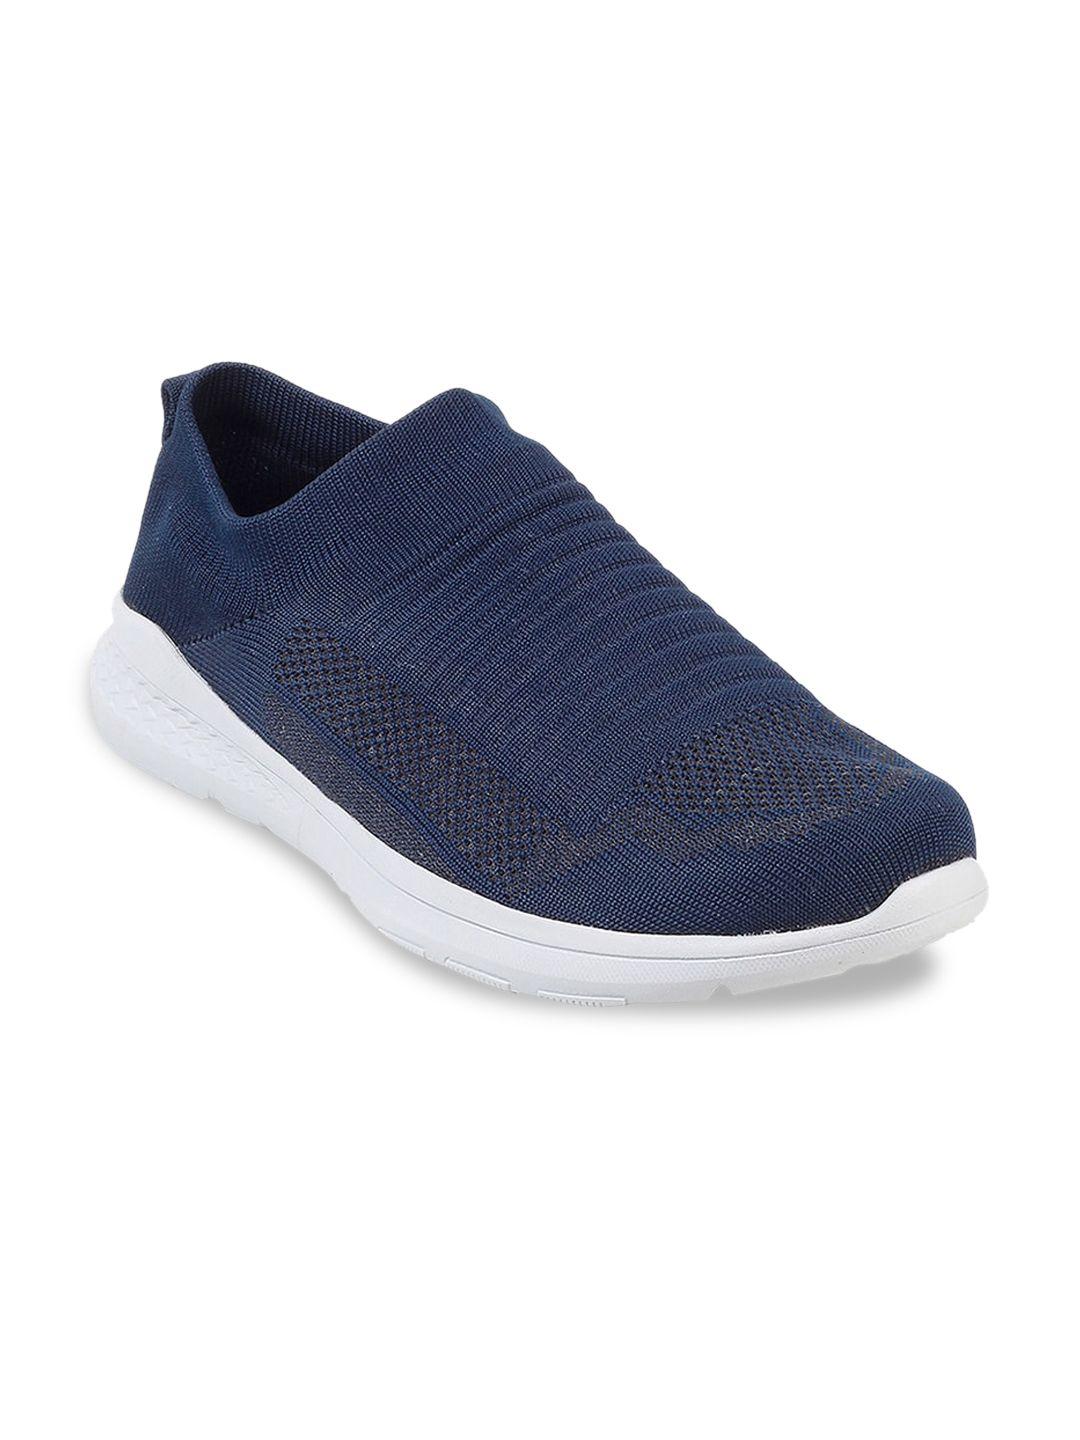 mochi men woven design comfort insole contrast sole slip-on sneakers